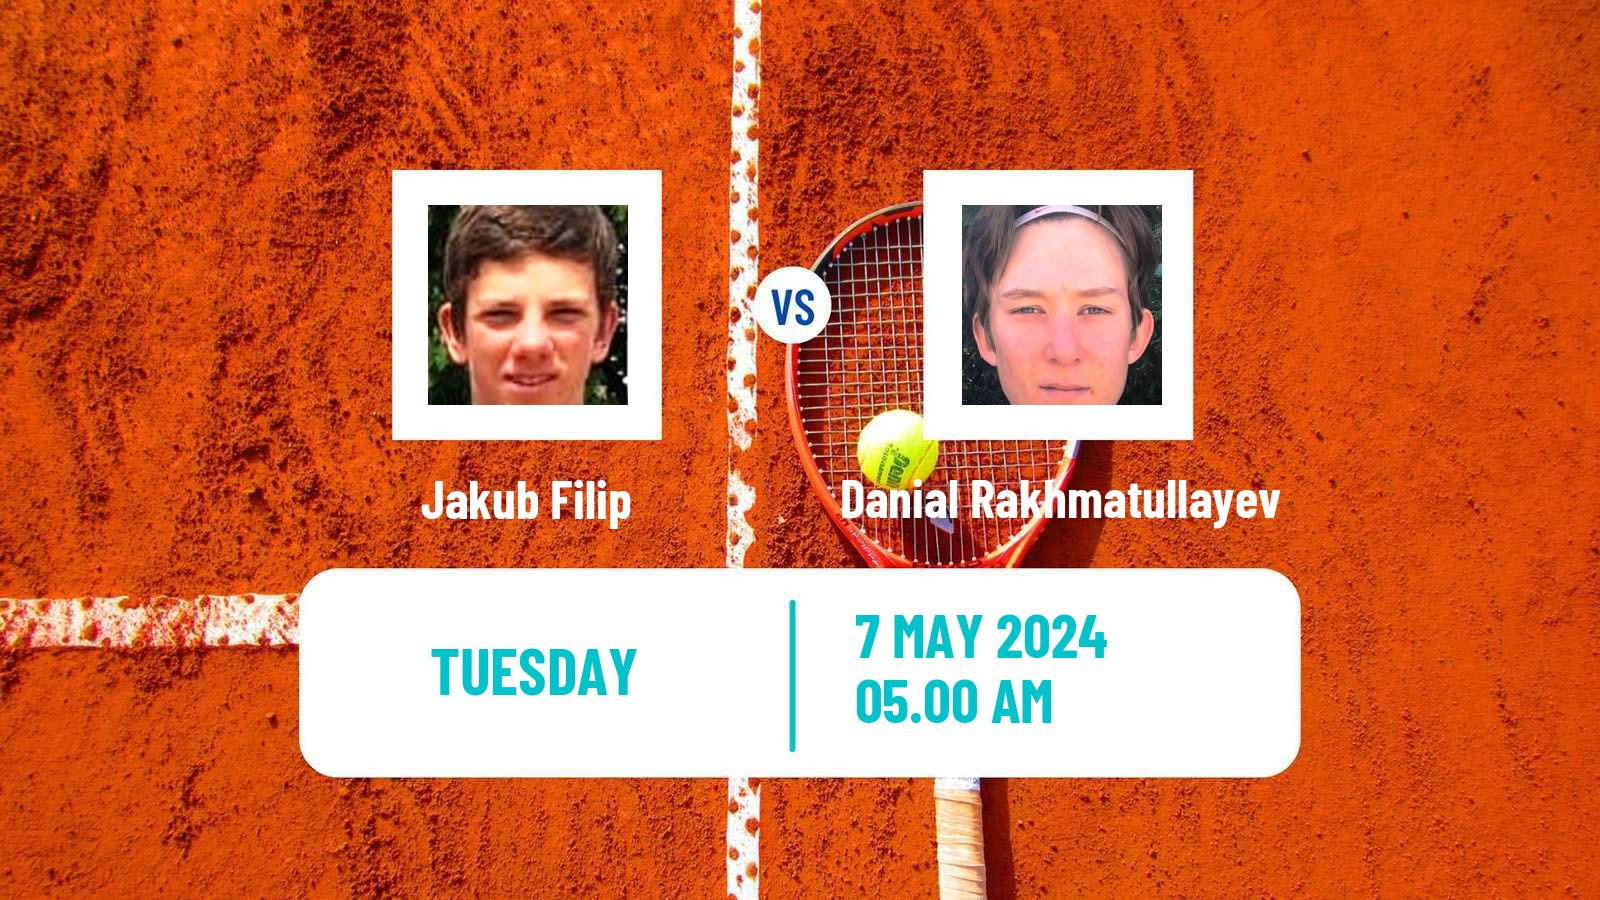 Tennis ITF M15 Antalya 14 Men Jakub Filip - Danial Rakhmatullayev